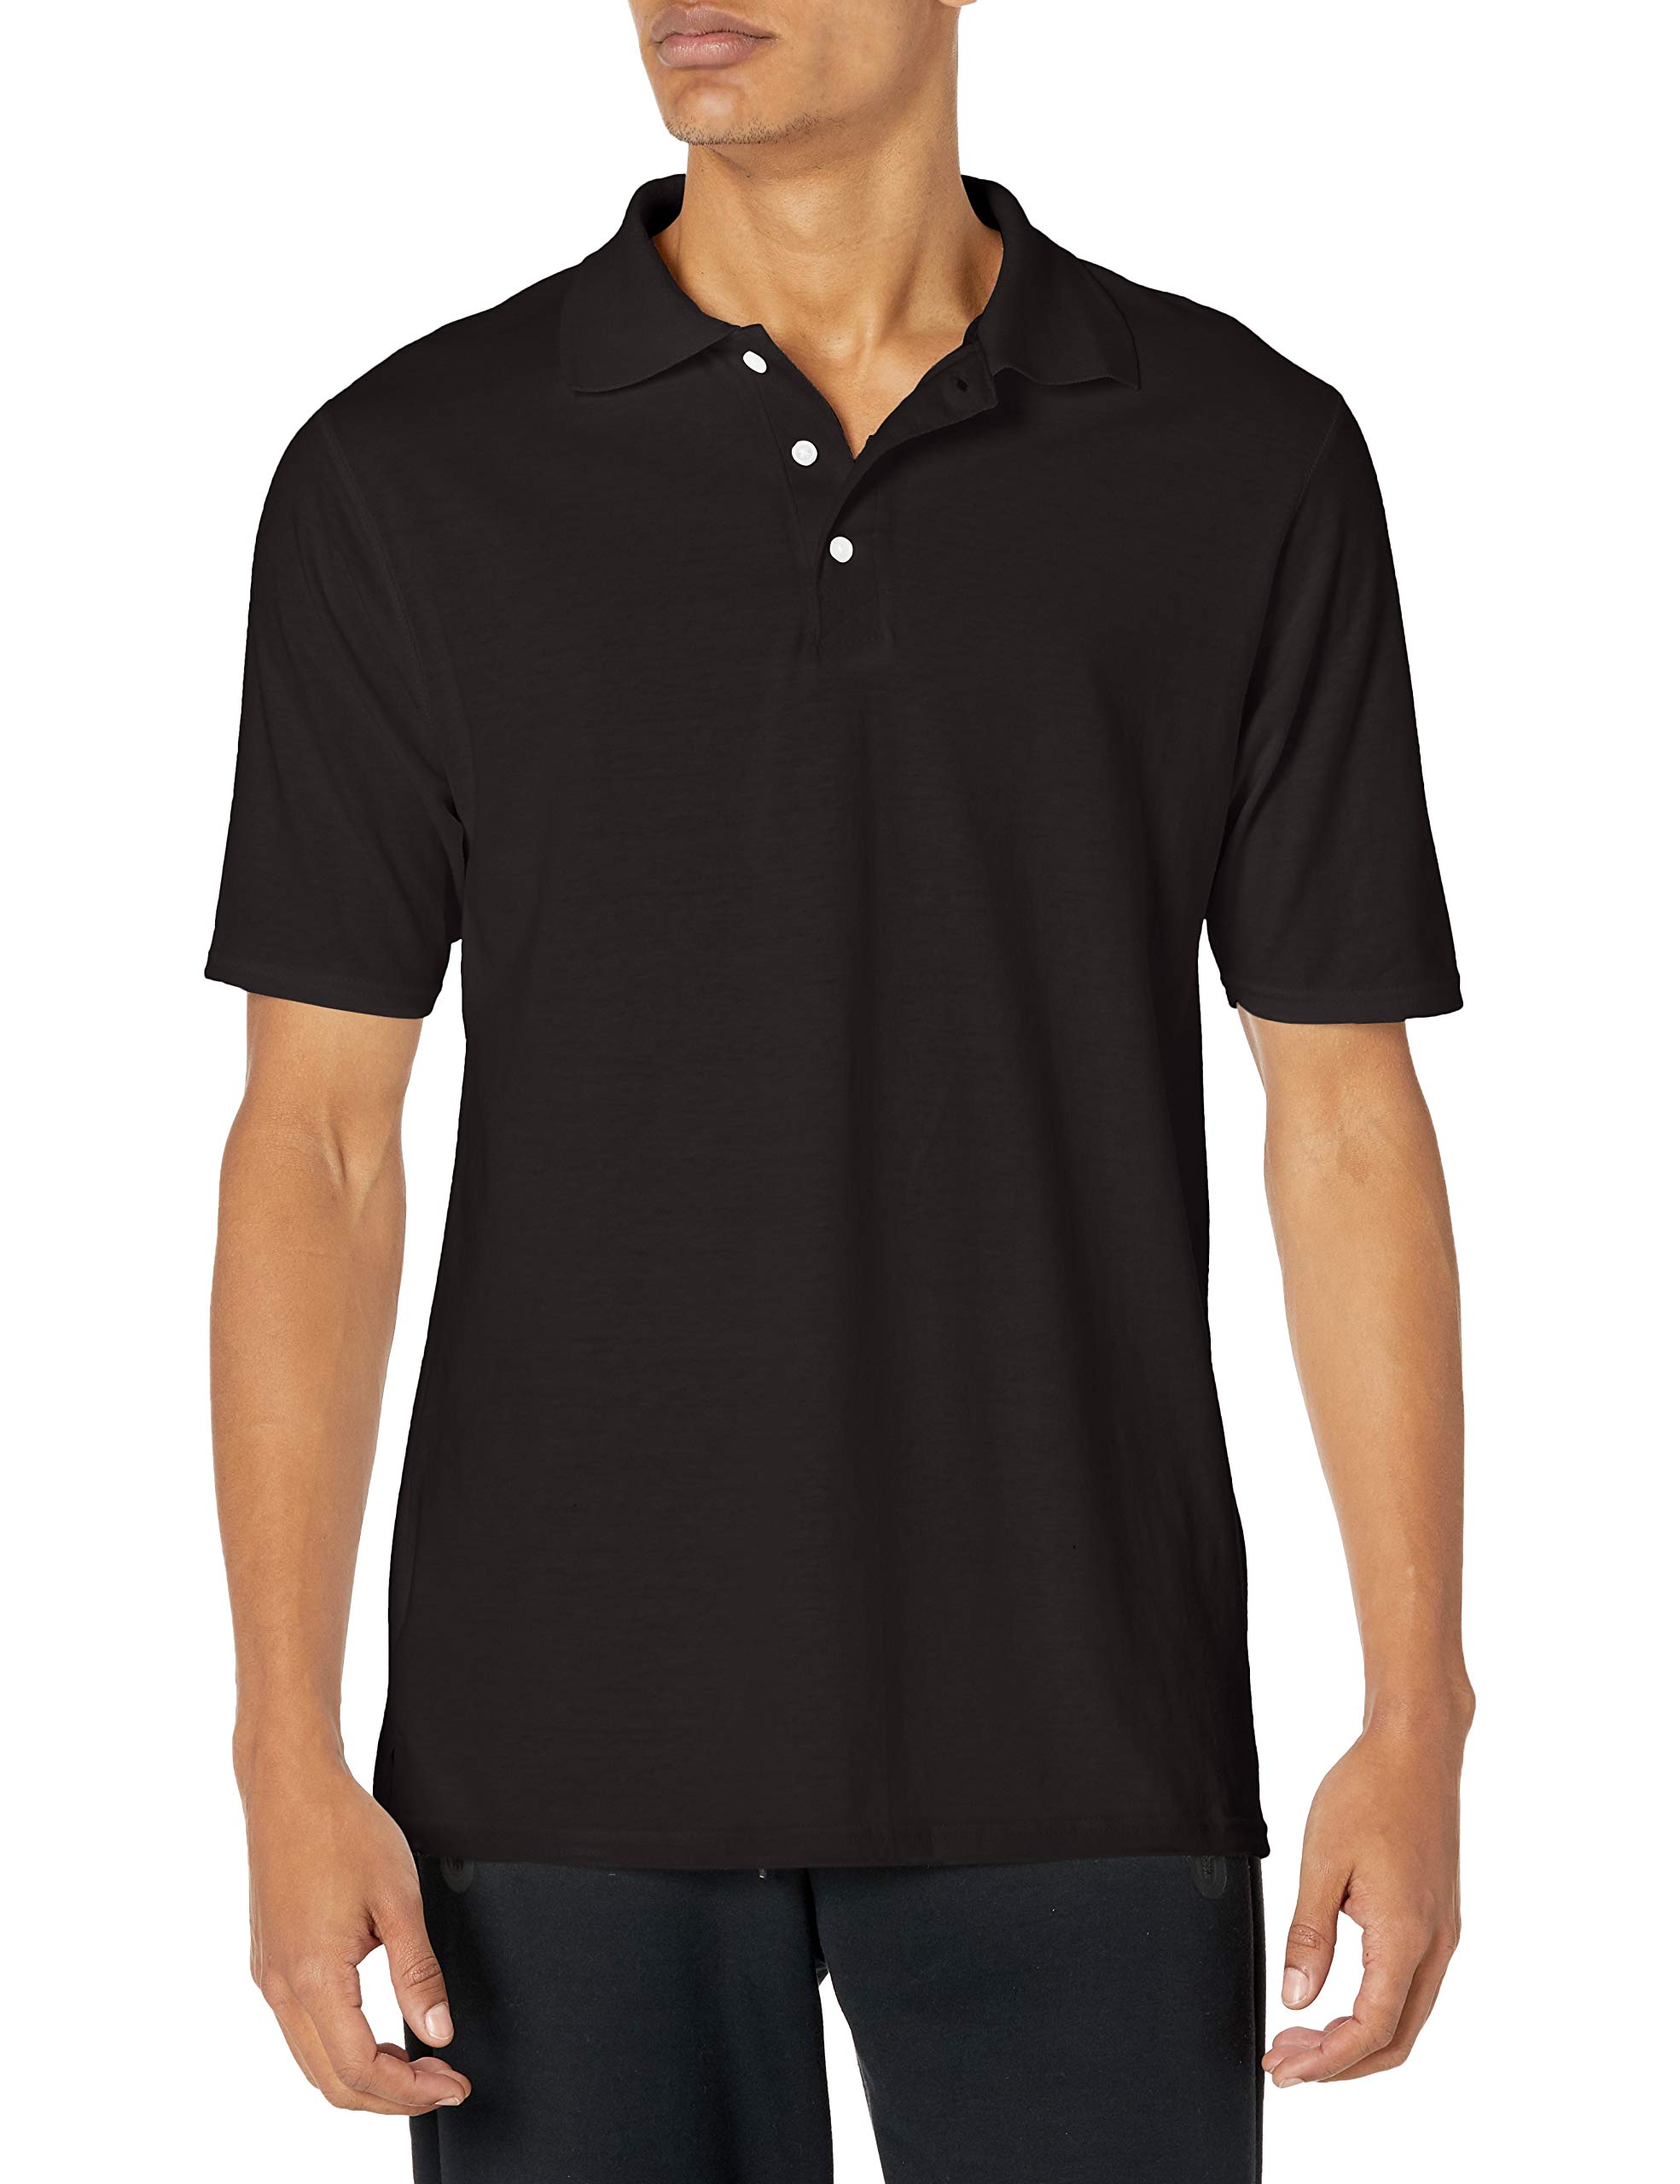 Hanes Men's FreshIQ Polo Shirt, Men’s X-Temp Polo Shirt, Moisture-Wicking Performance Polo Shirt